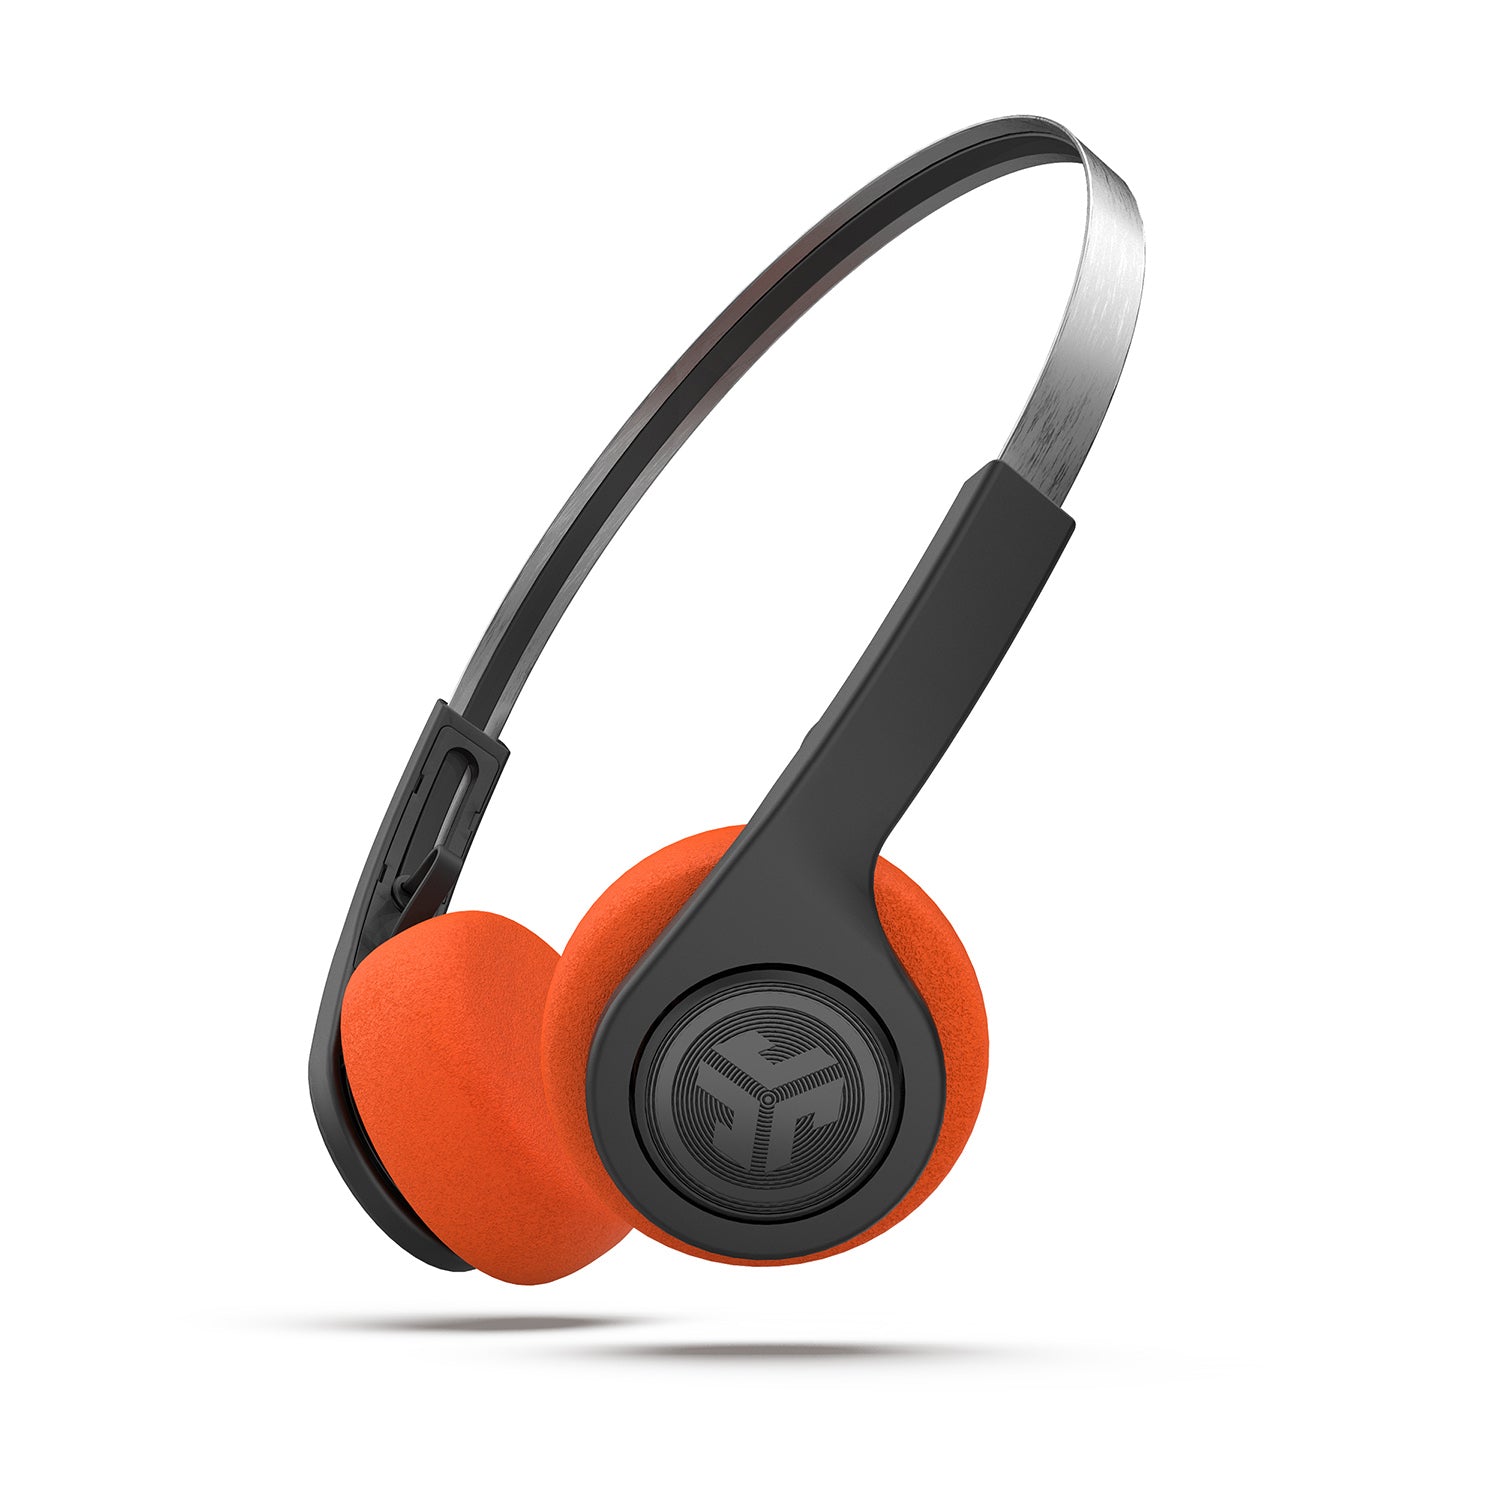 Rewind Wireless Retro Headphones with 12 hour Bluetooth playtime – JLab